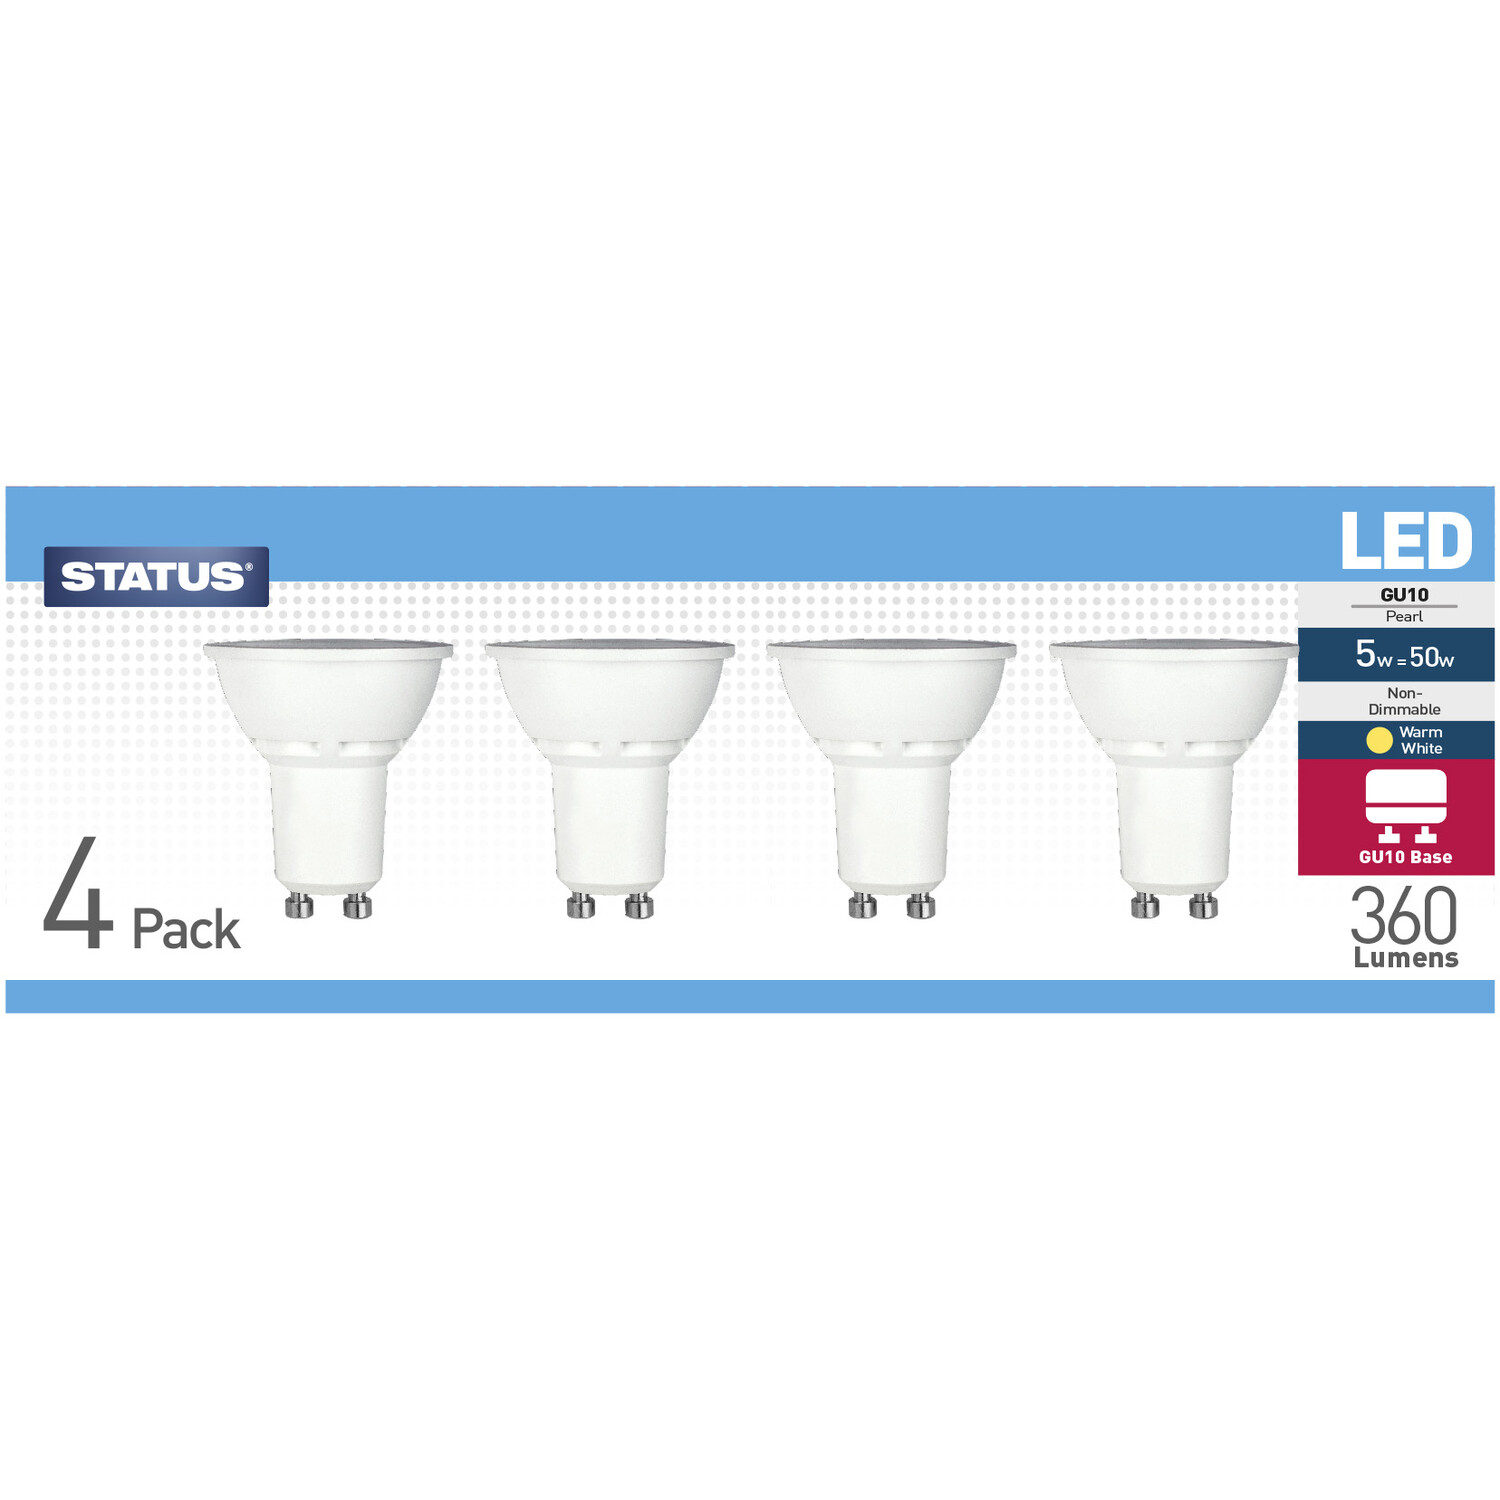 Status Gu10 LED 360 Lumens Light Bulb 4 Pack Image 1